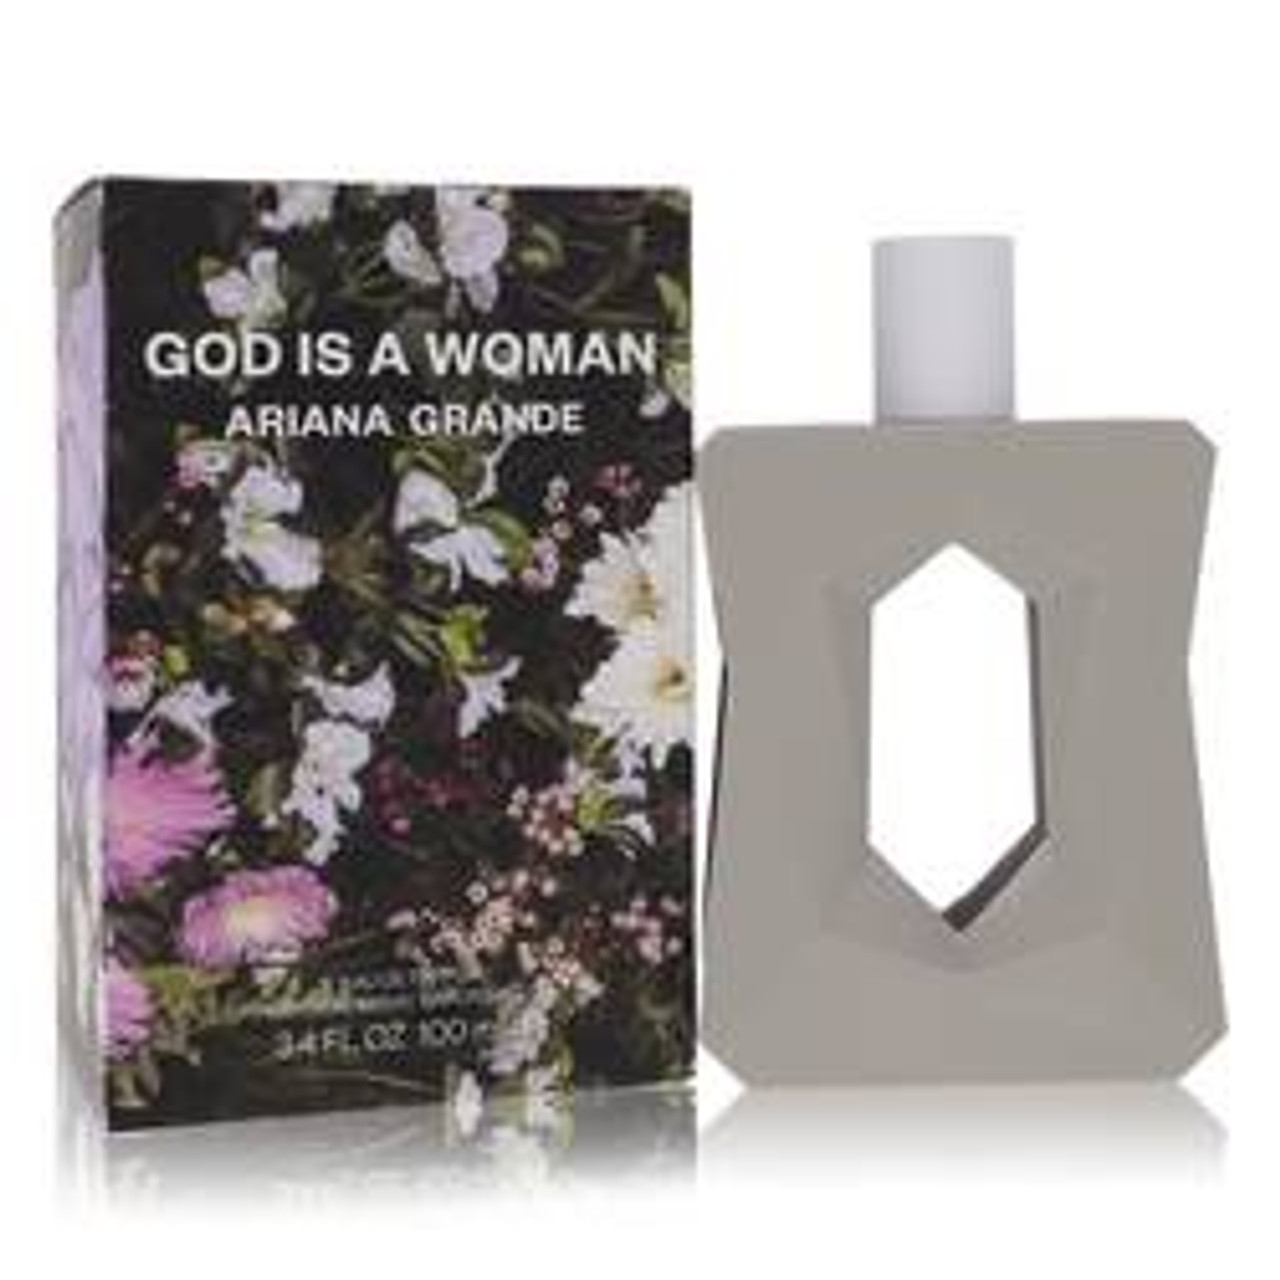 Ariana Grande God Is A Woman Perfume By Ariana Grande Eau De Parfum Spray 3.4 oz for Women - *Pre-Order